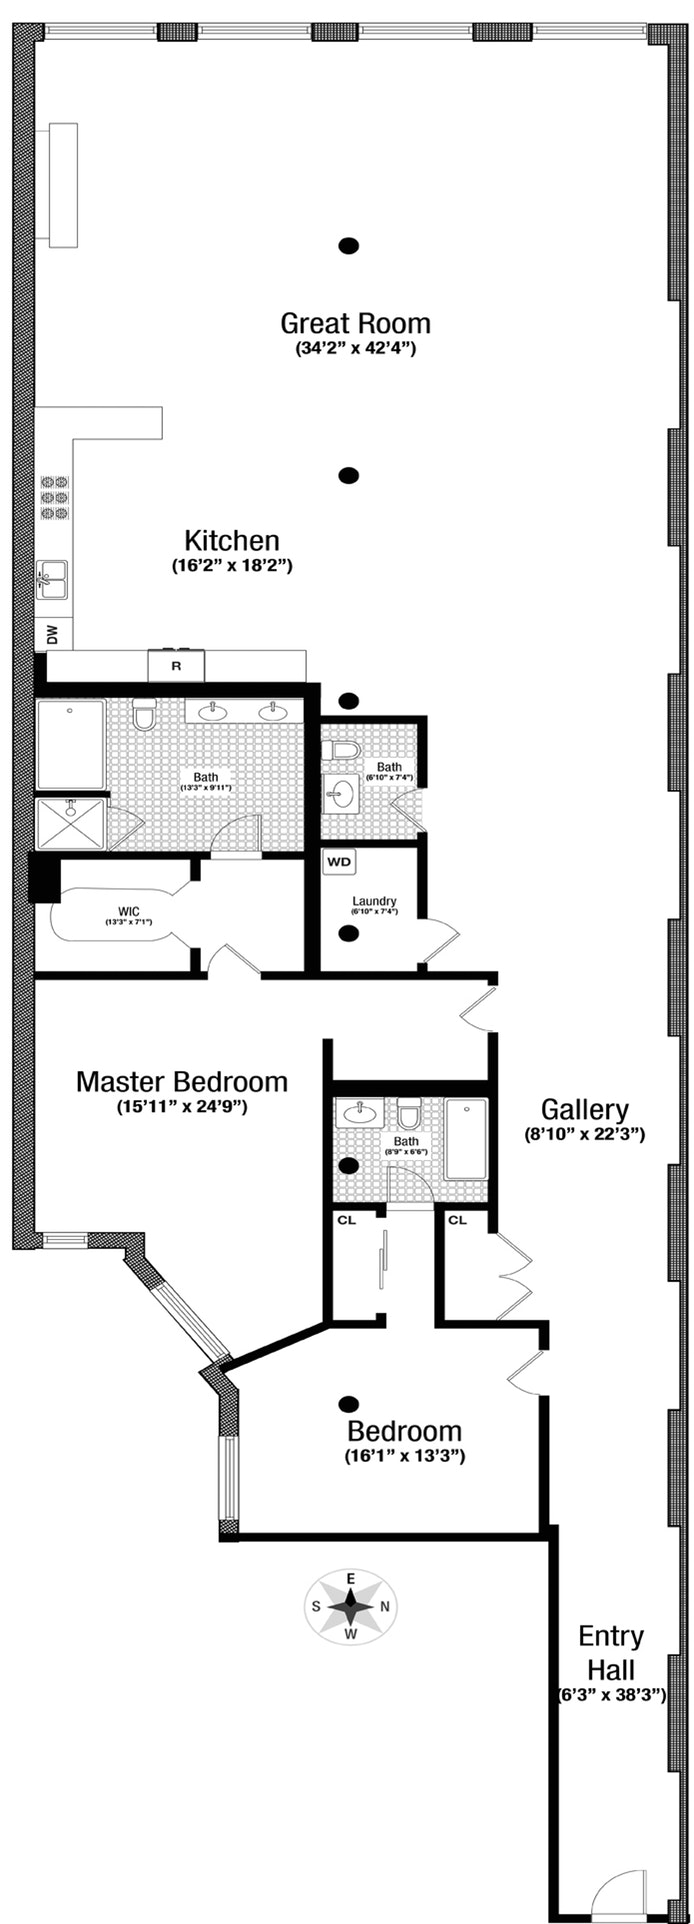 Floorplan for 56 Crosby Street, 3R